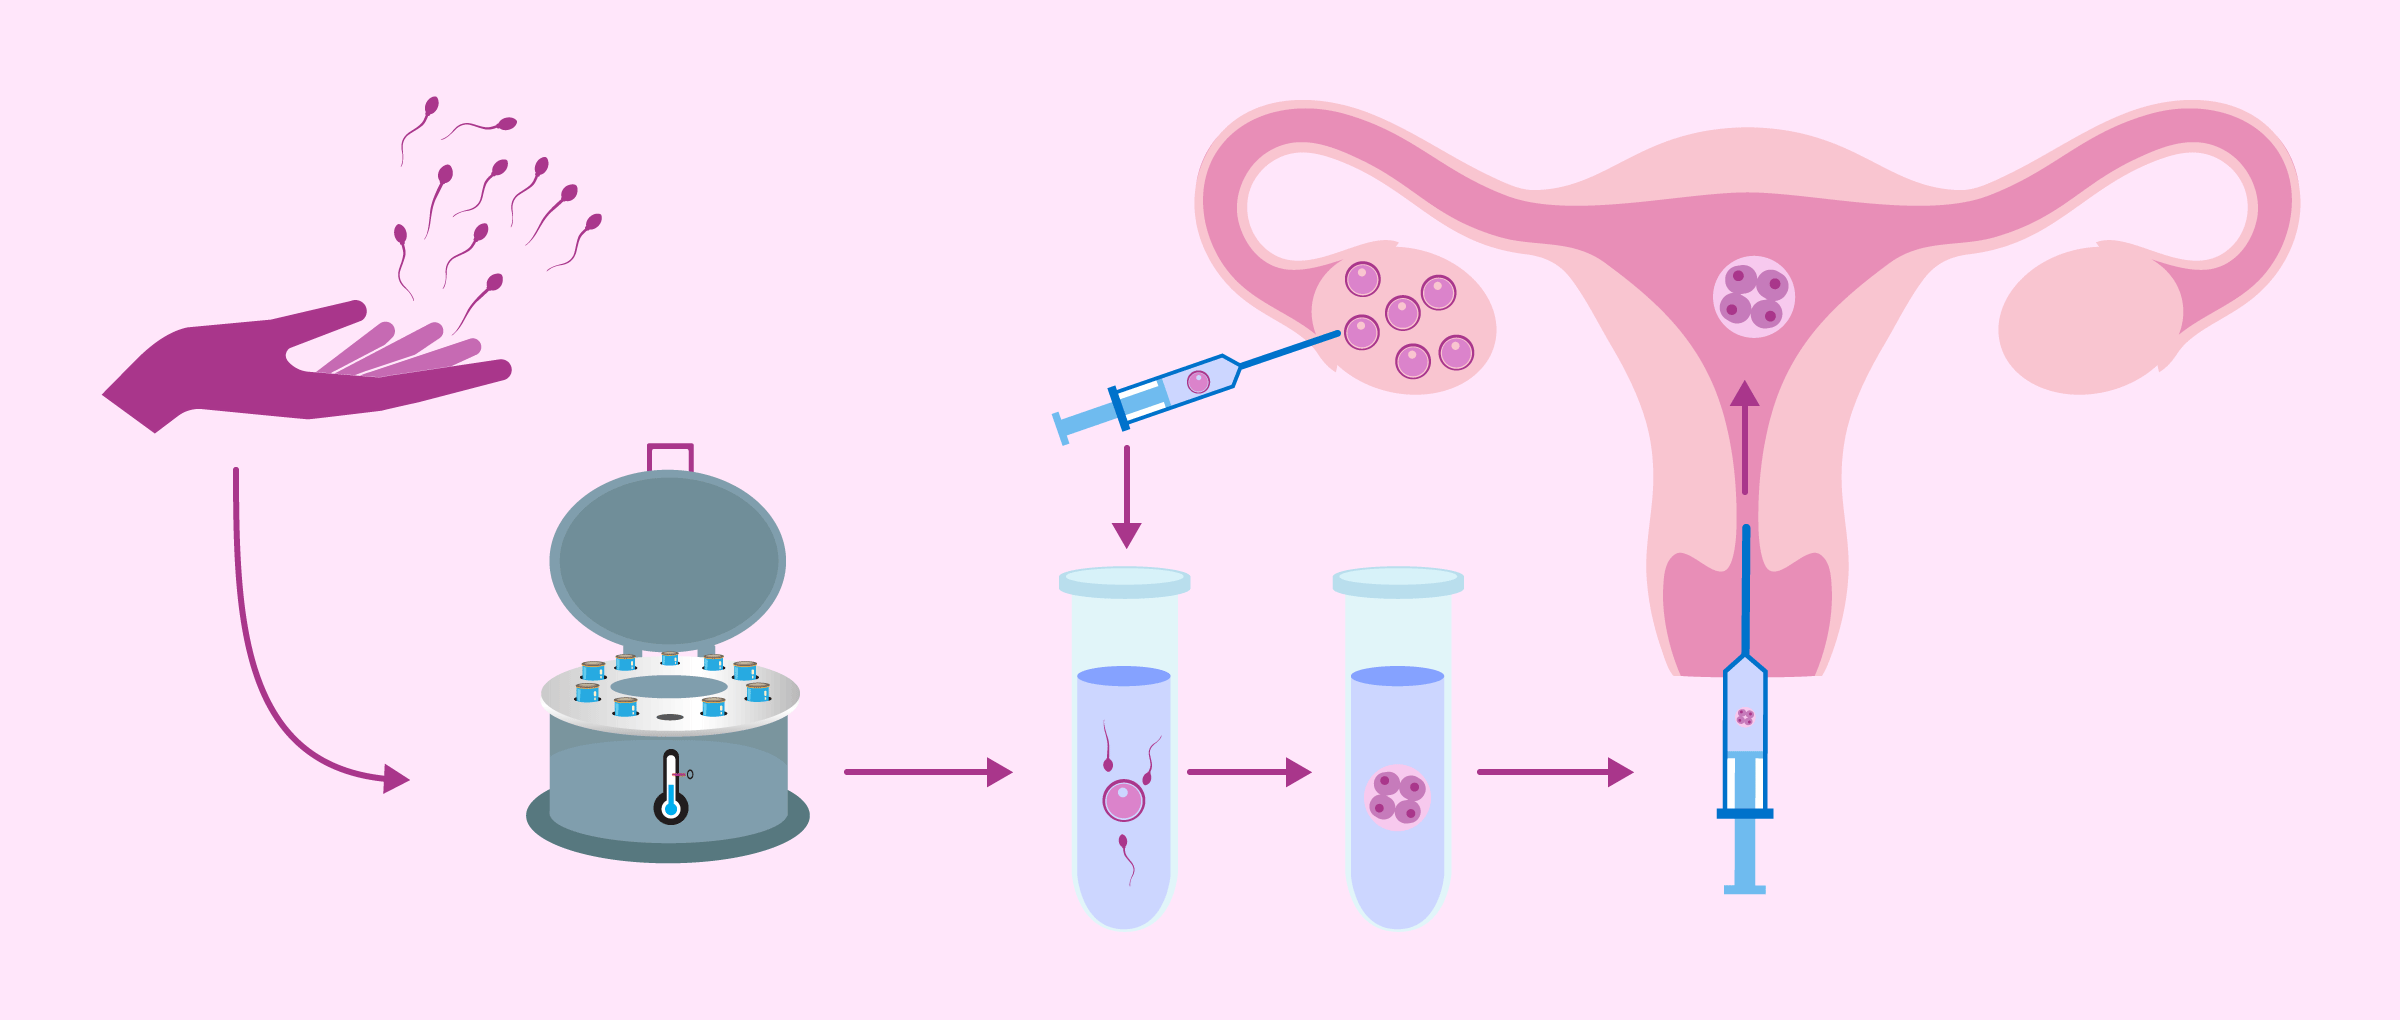 Sperm donation procedure